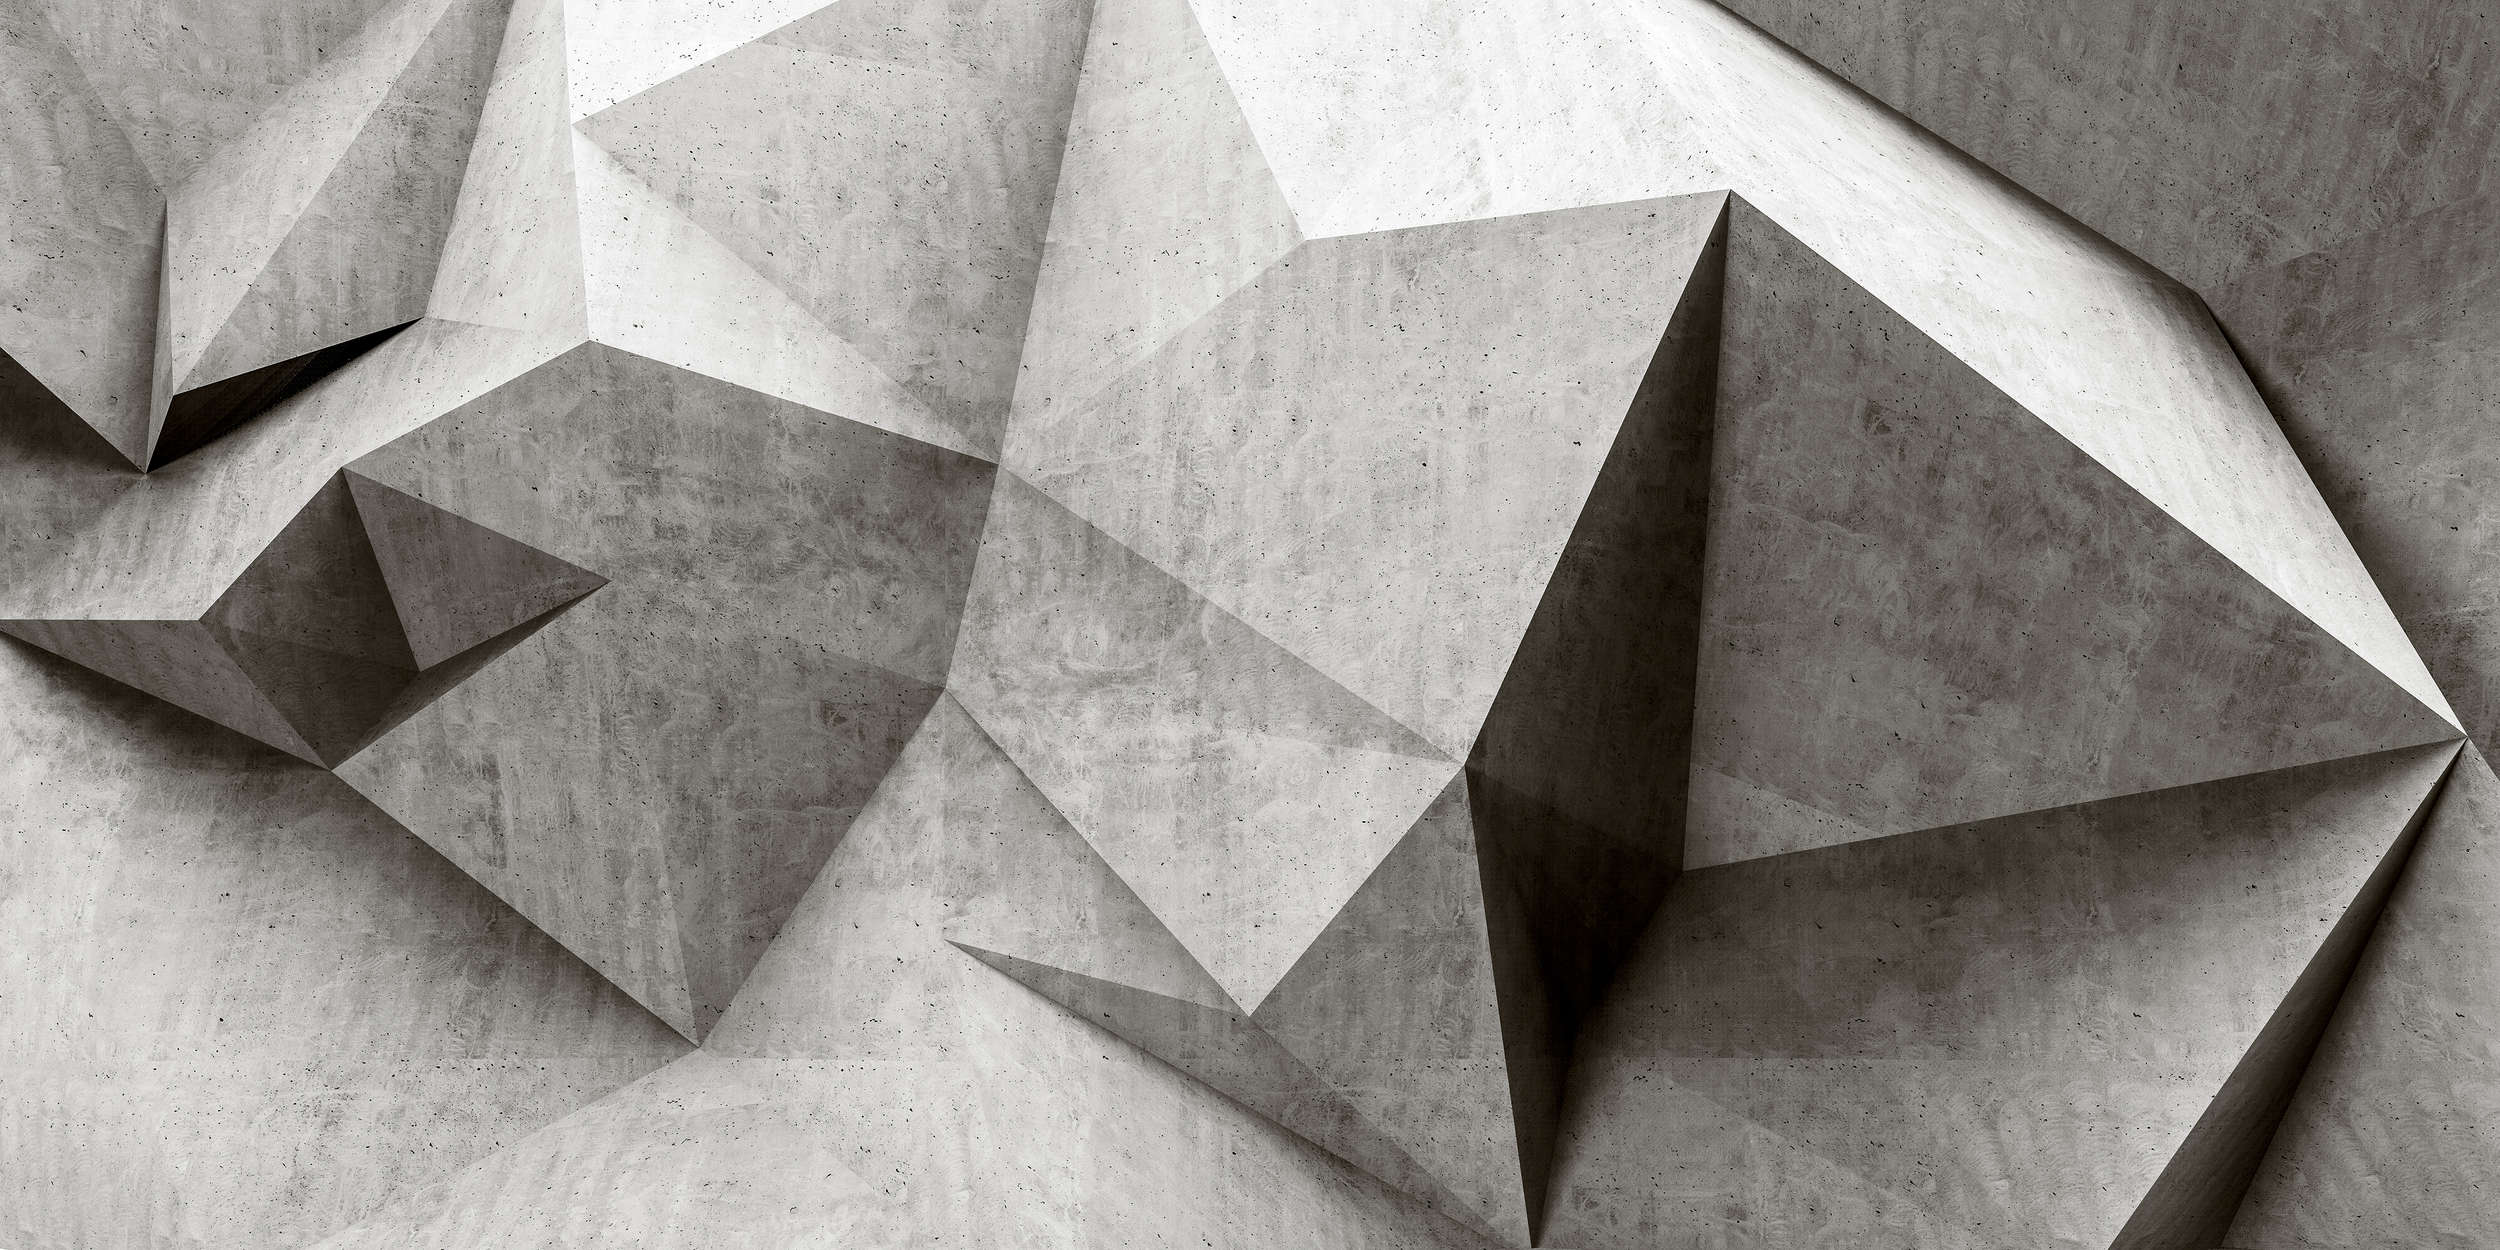             Boulder 1 - Coole 3D Beton-Polygone Fototapete – Grau, Schwarz | Struktur Vlies
        